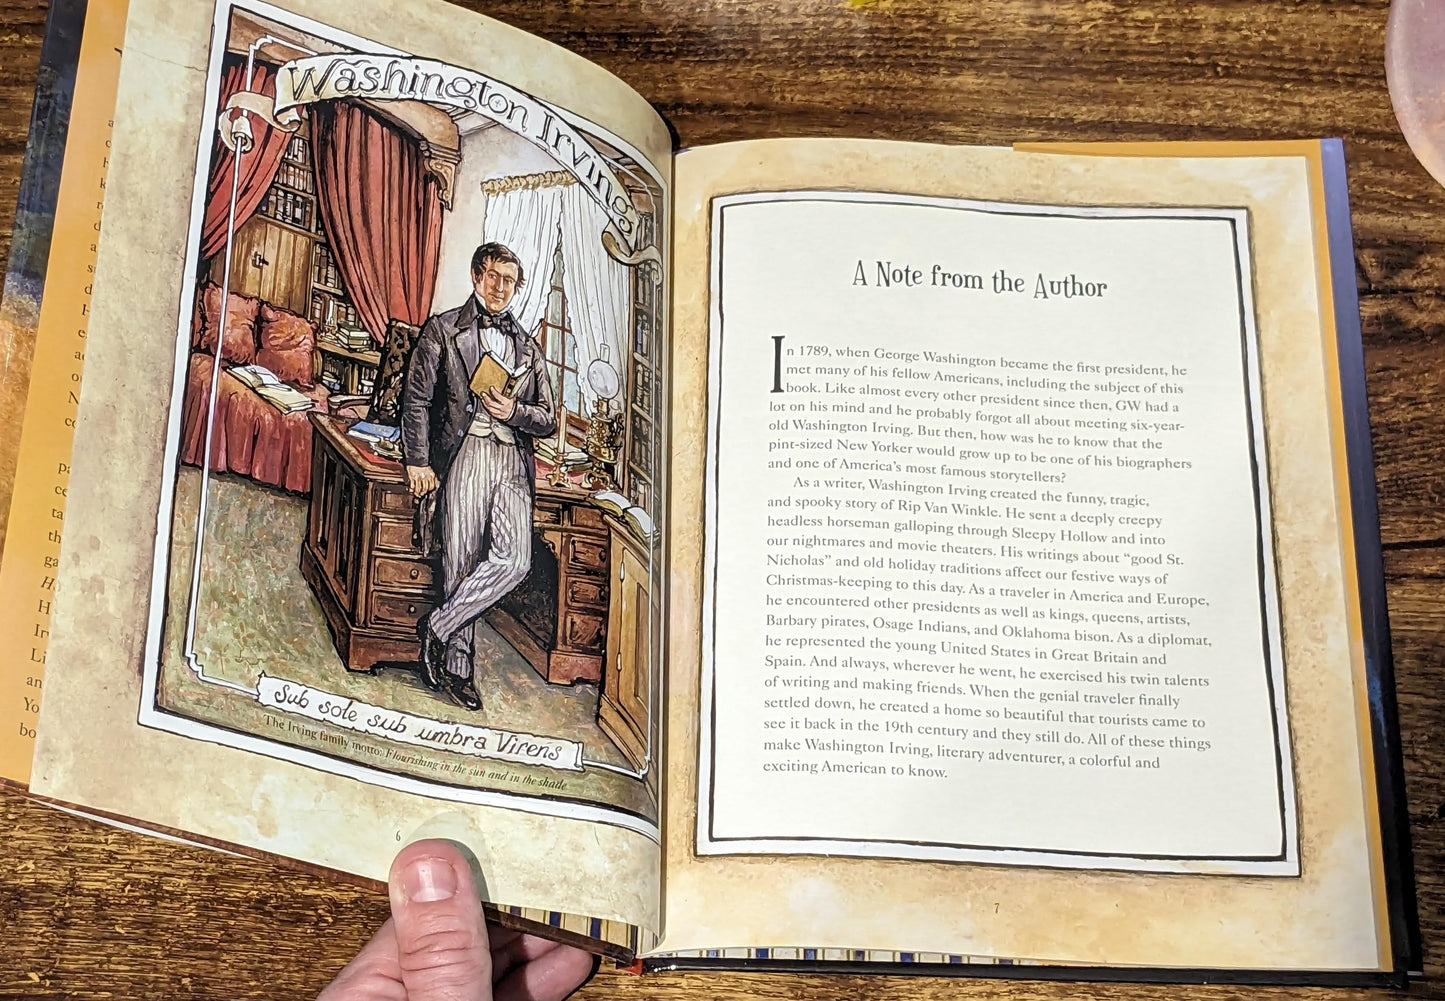 Literary Adventures of Washington Irving: American Storyteller, The (Hardcover) by Cheryl Harness - Asylum Books